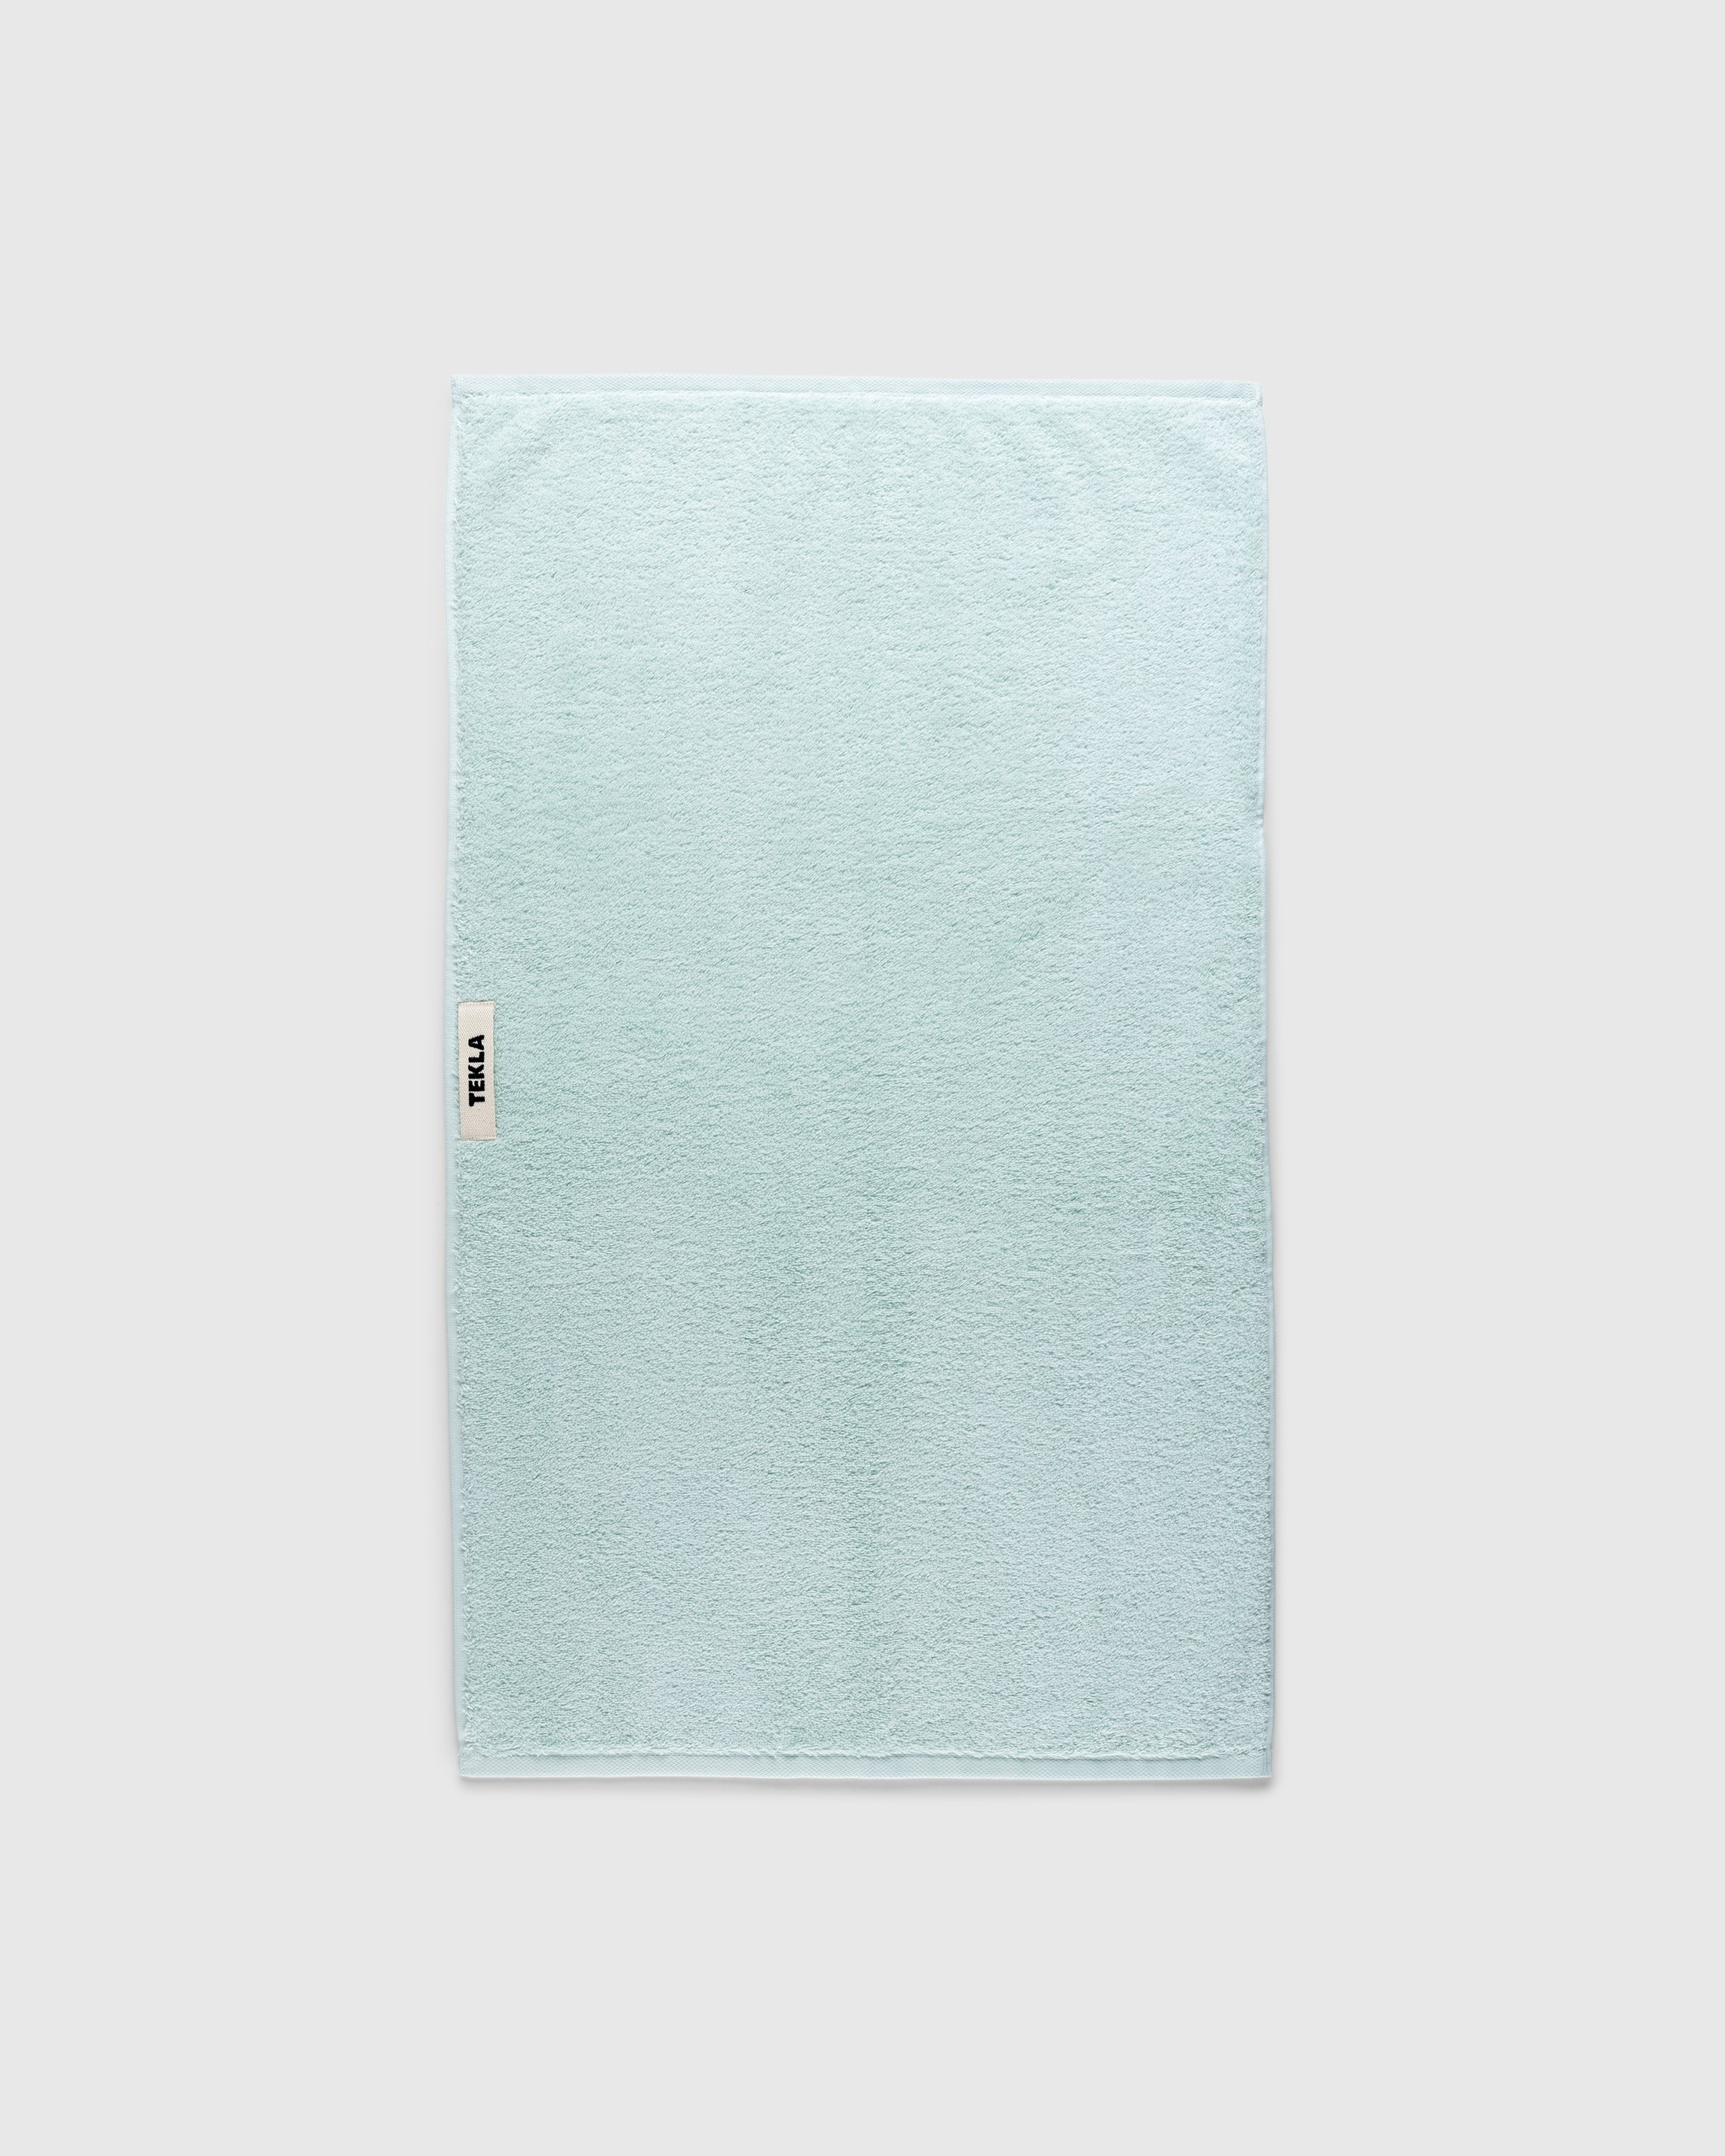 Tekla - Hand Towel Mint - Lifestyle - Green - Image 2